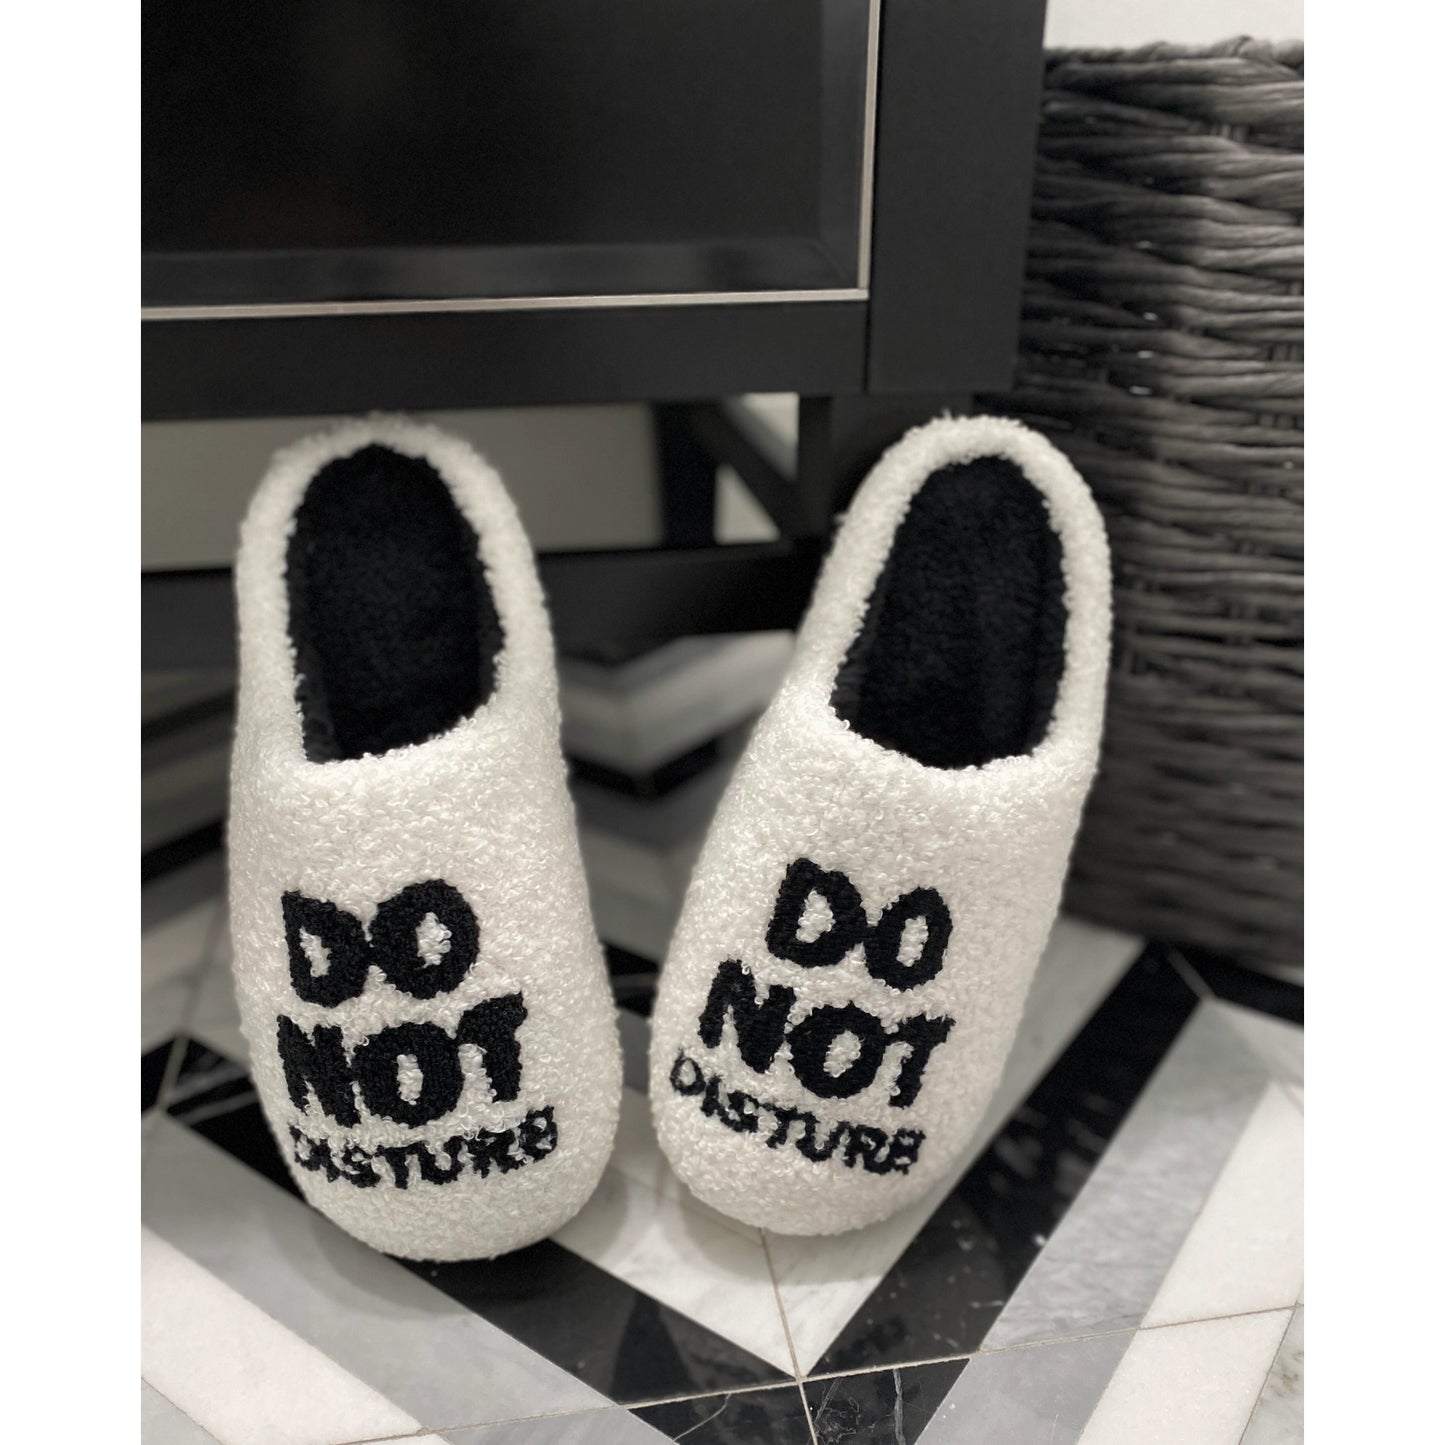 Do Not Disturb Slippers